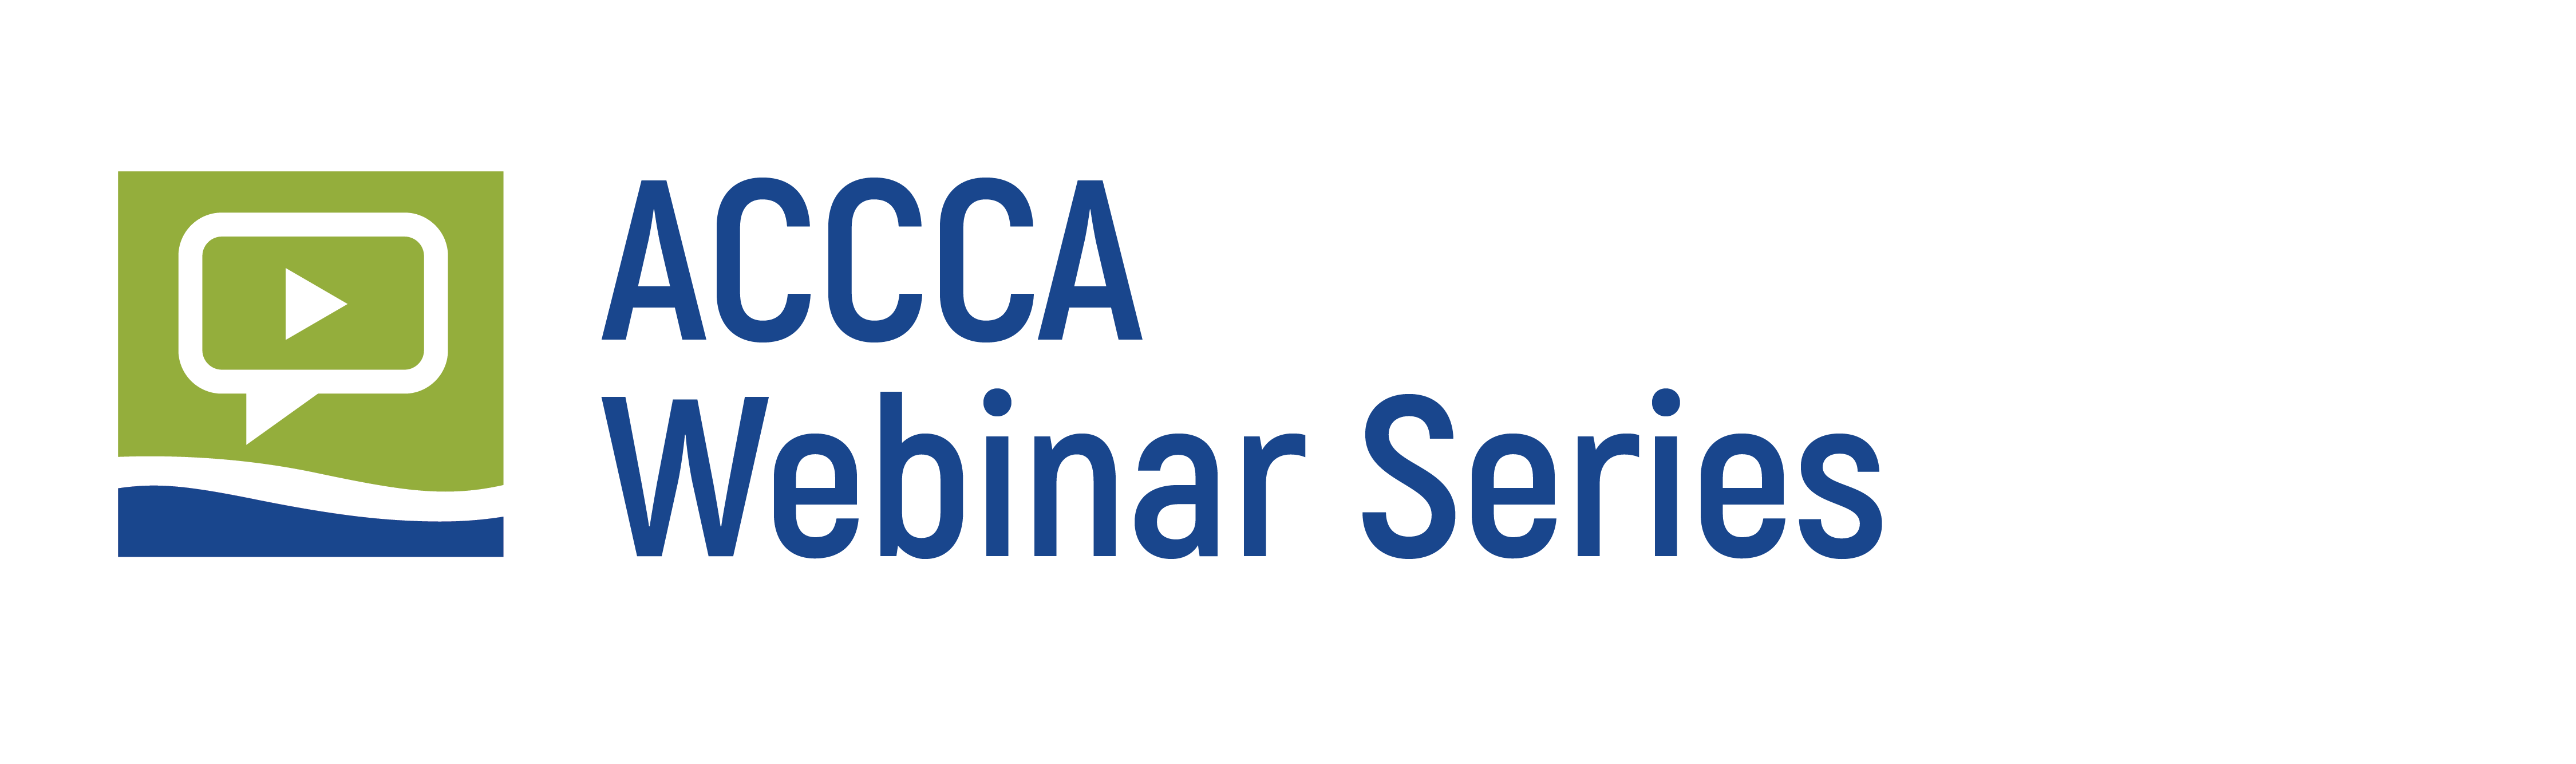 ACCCA Webinar Series Logo